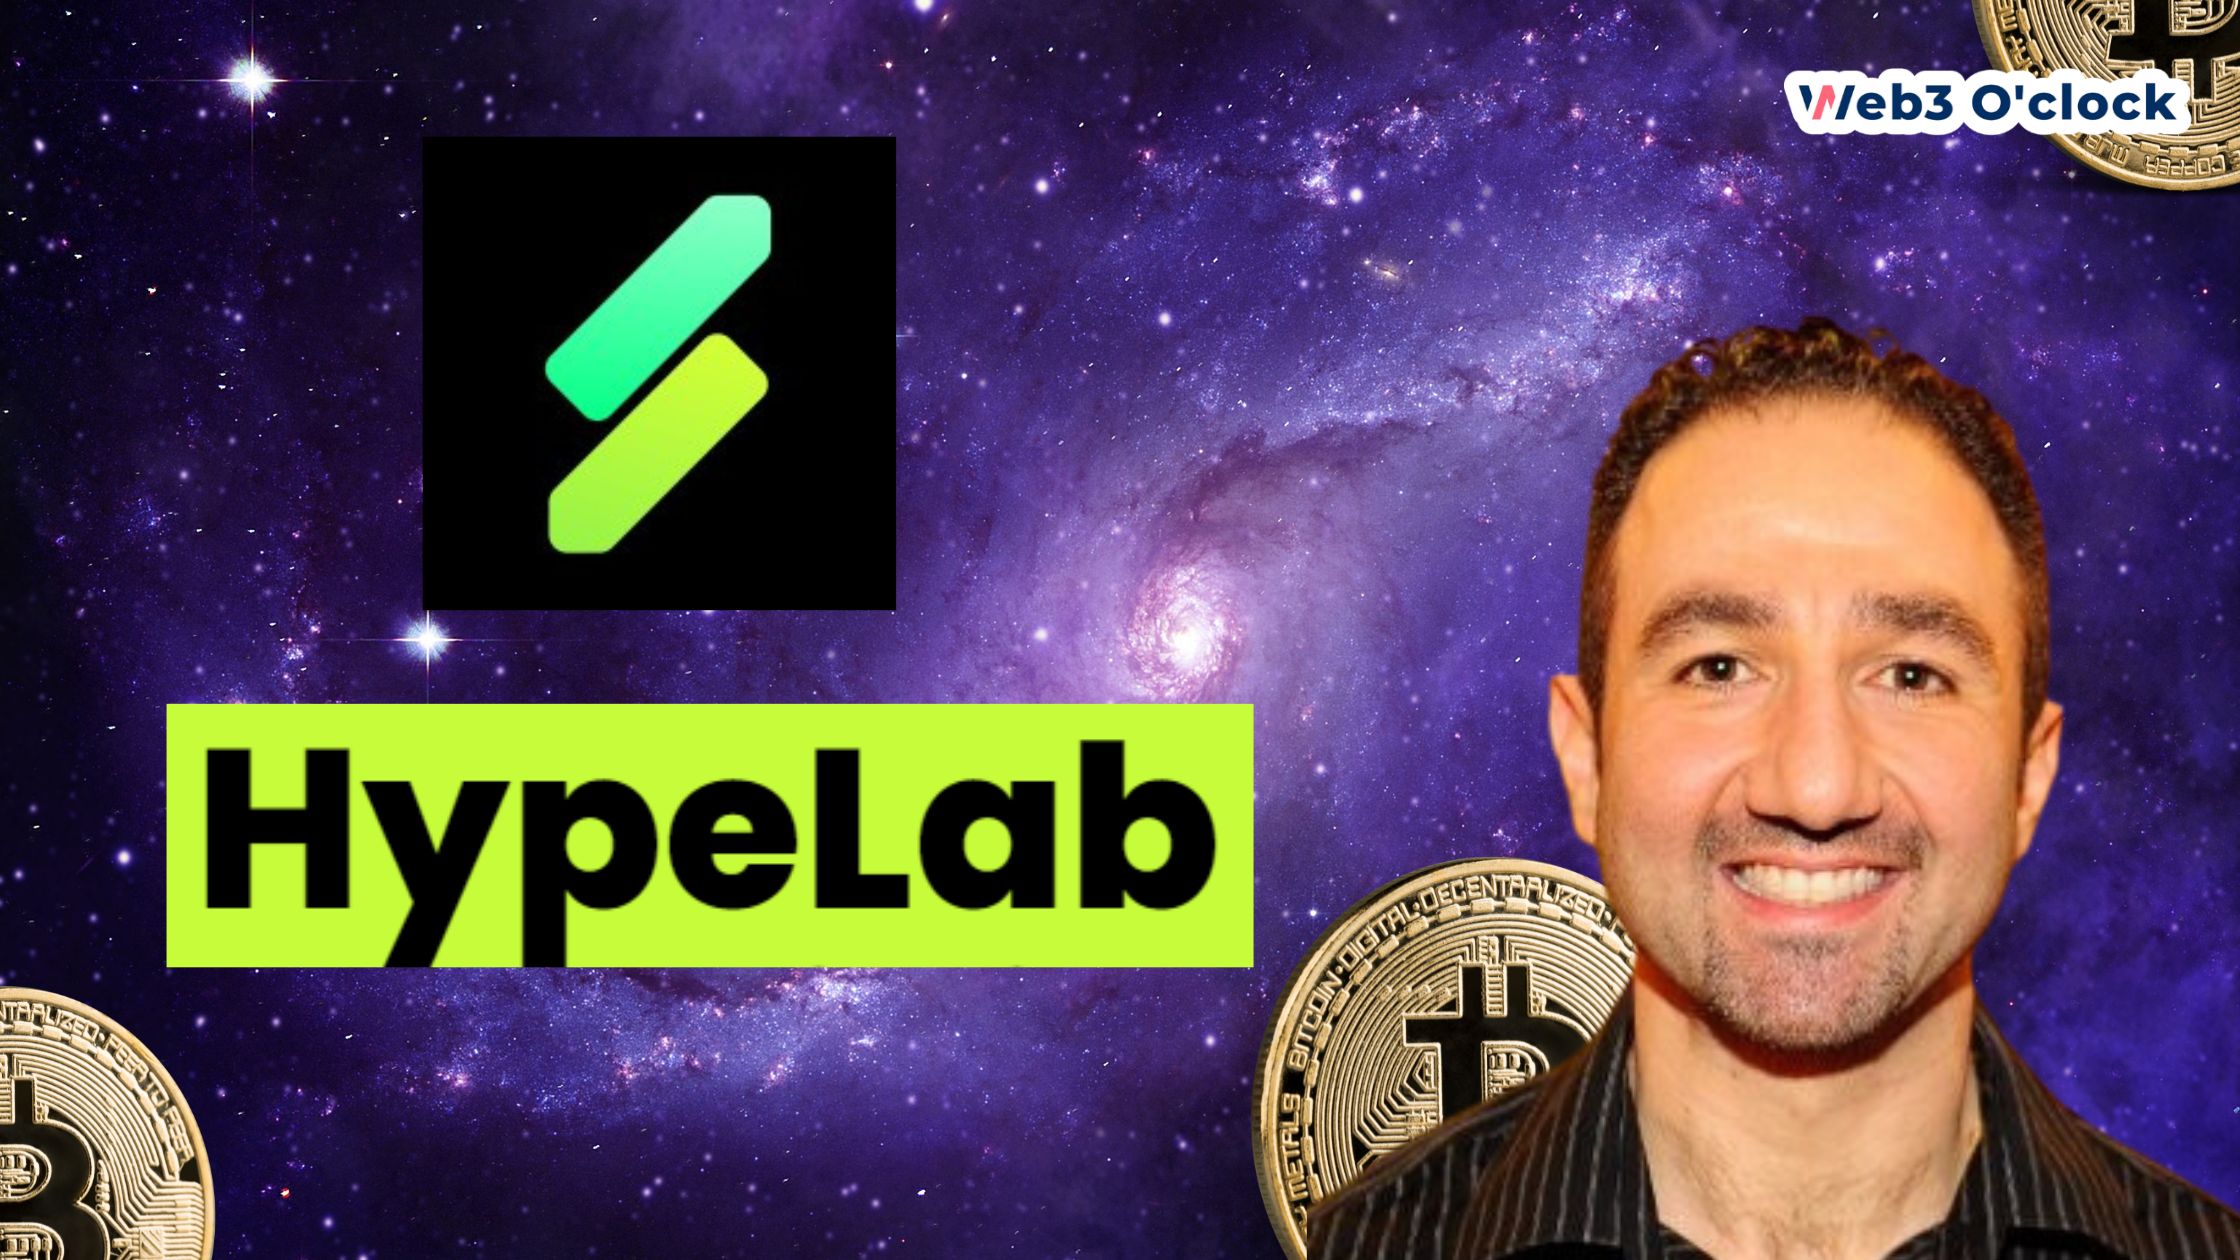 HypeLab's $4 Million Funding Boost by web3oclock